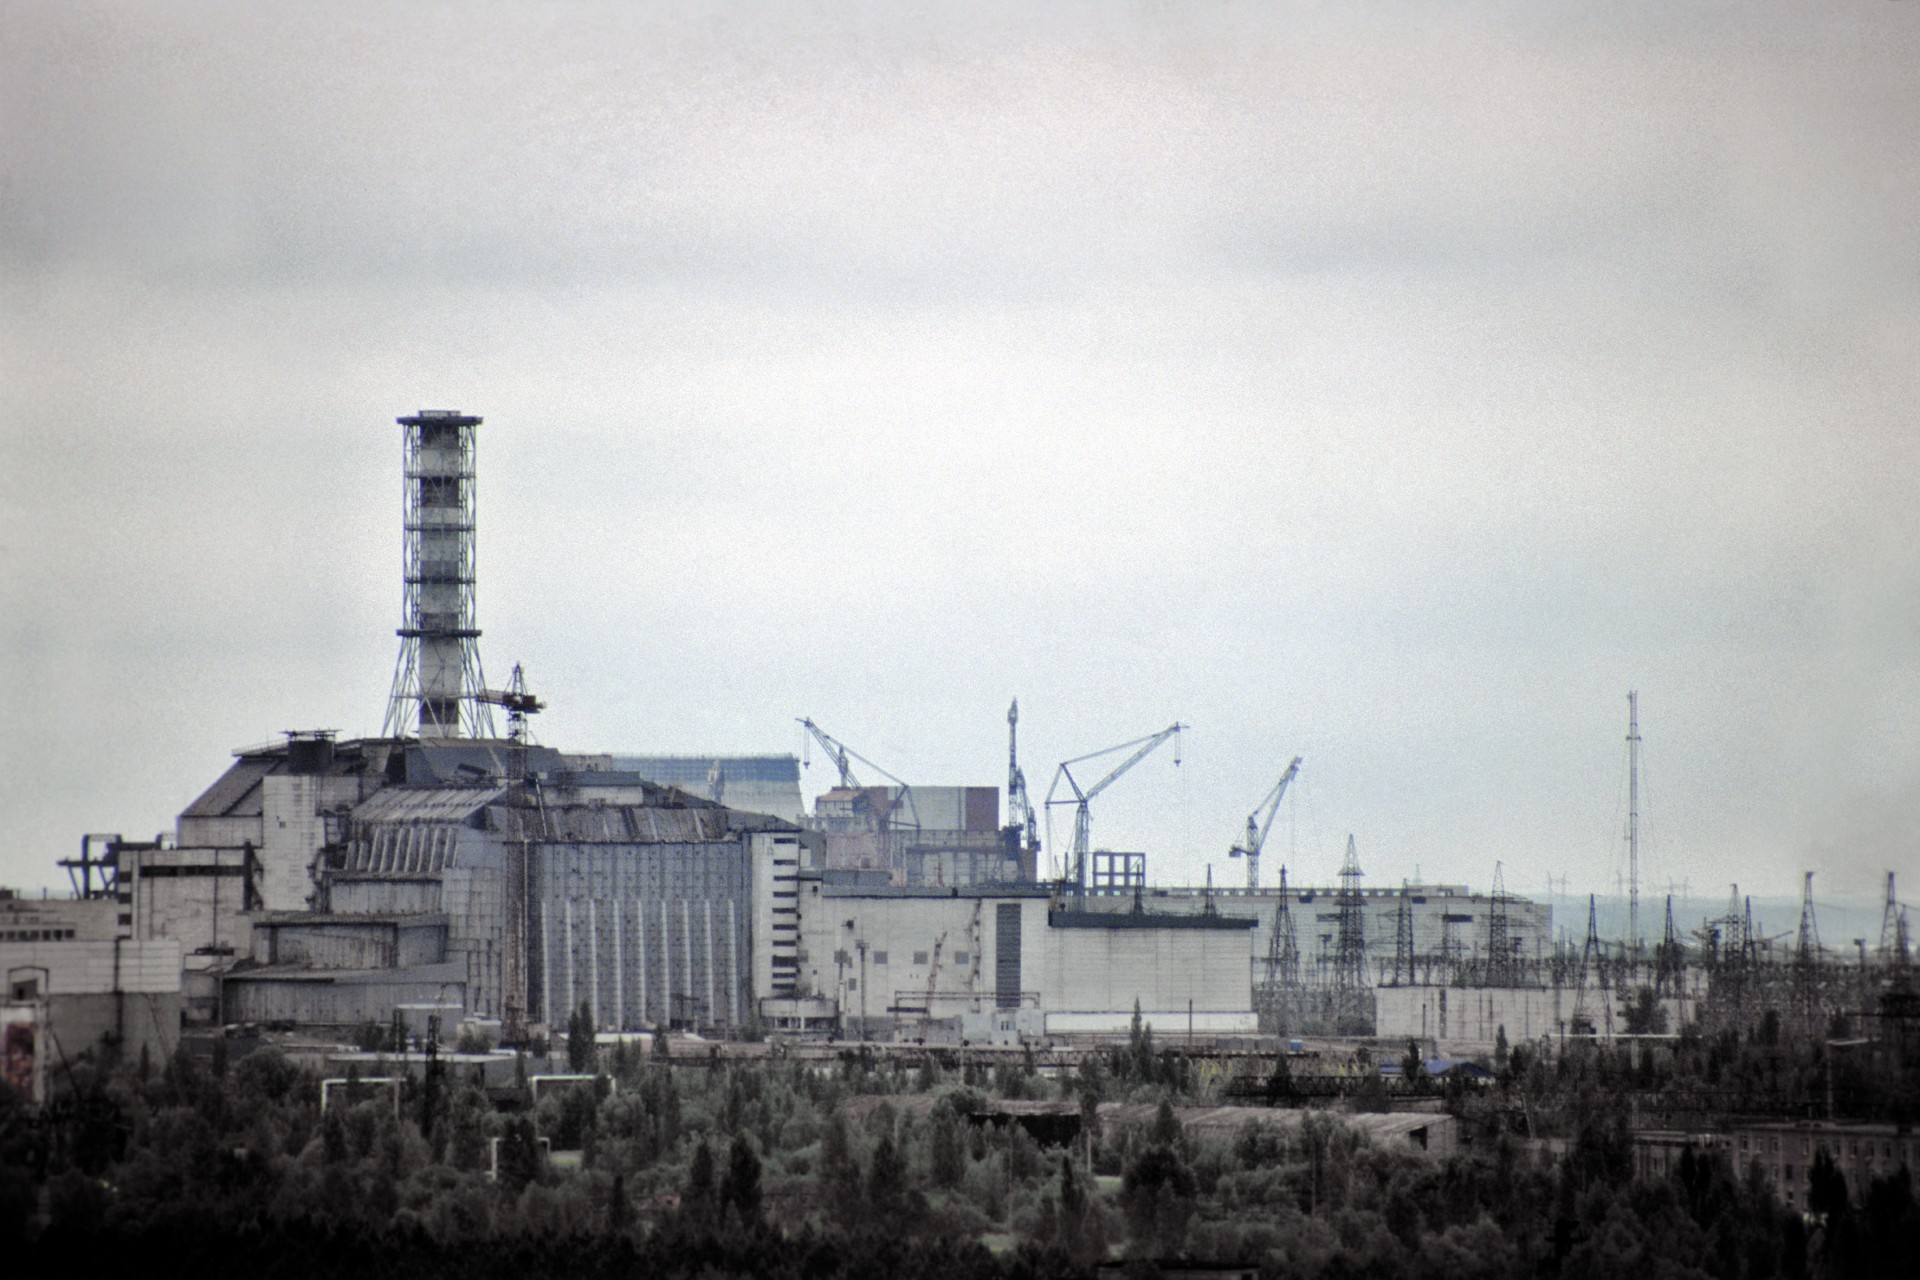 chernobyl sarcophagus the reactor